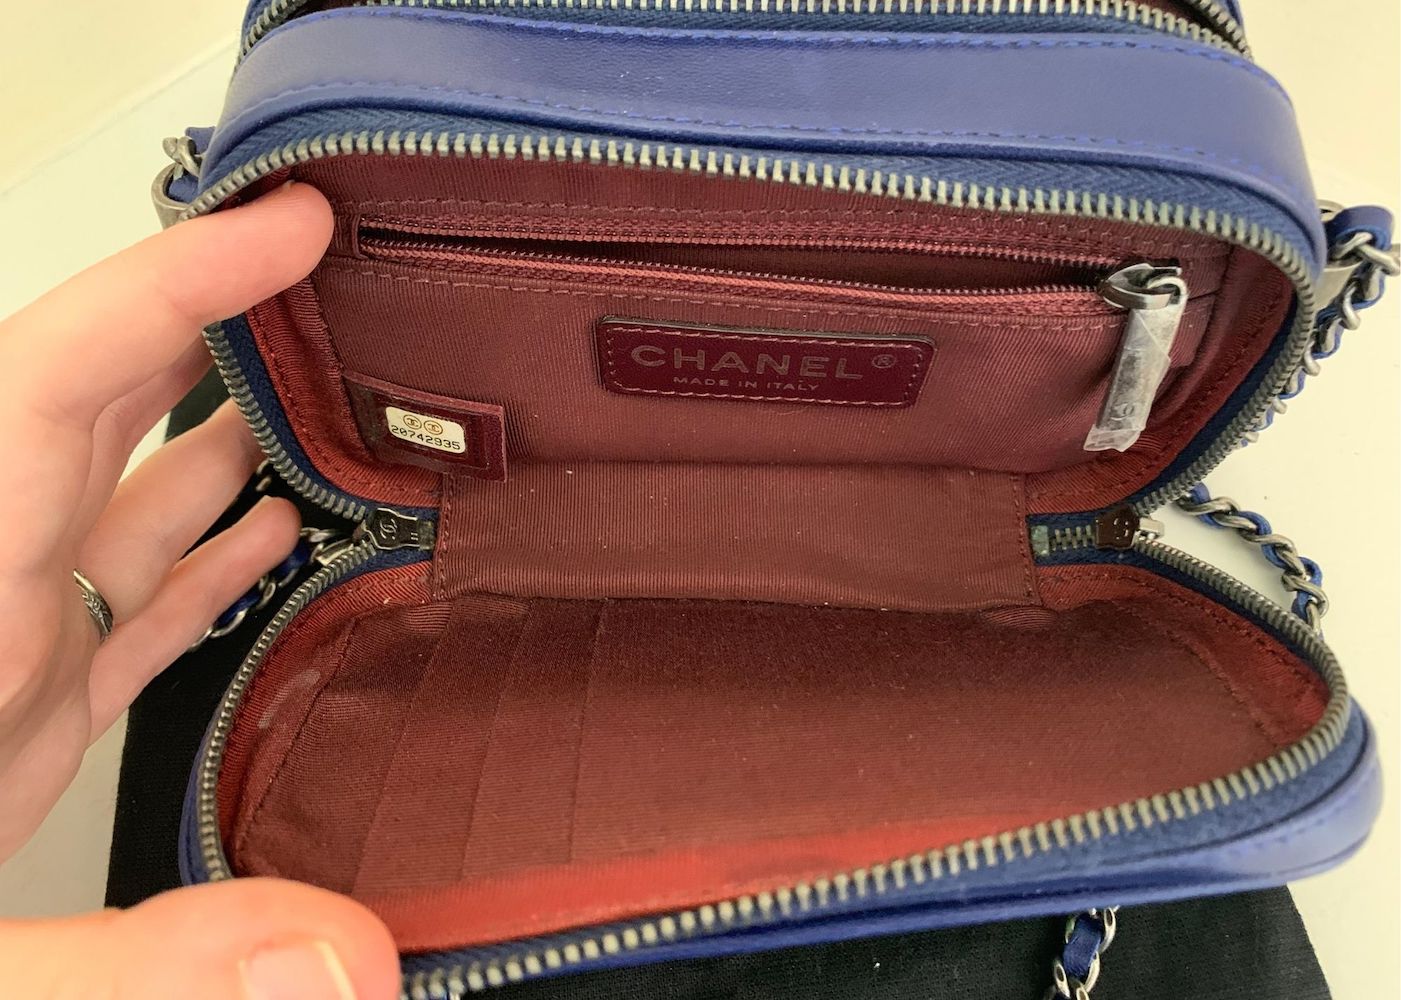 Chanel Coco Boy Camera Bag Mini Blue